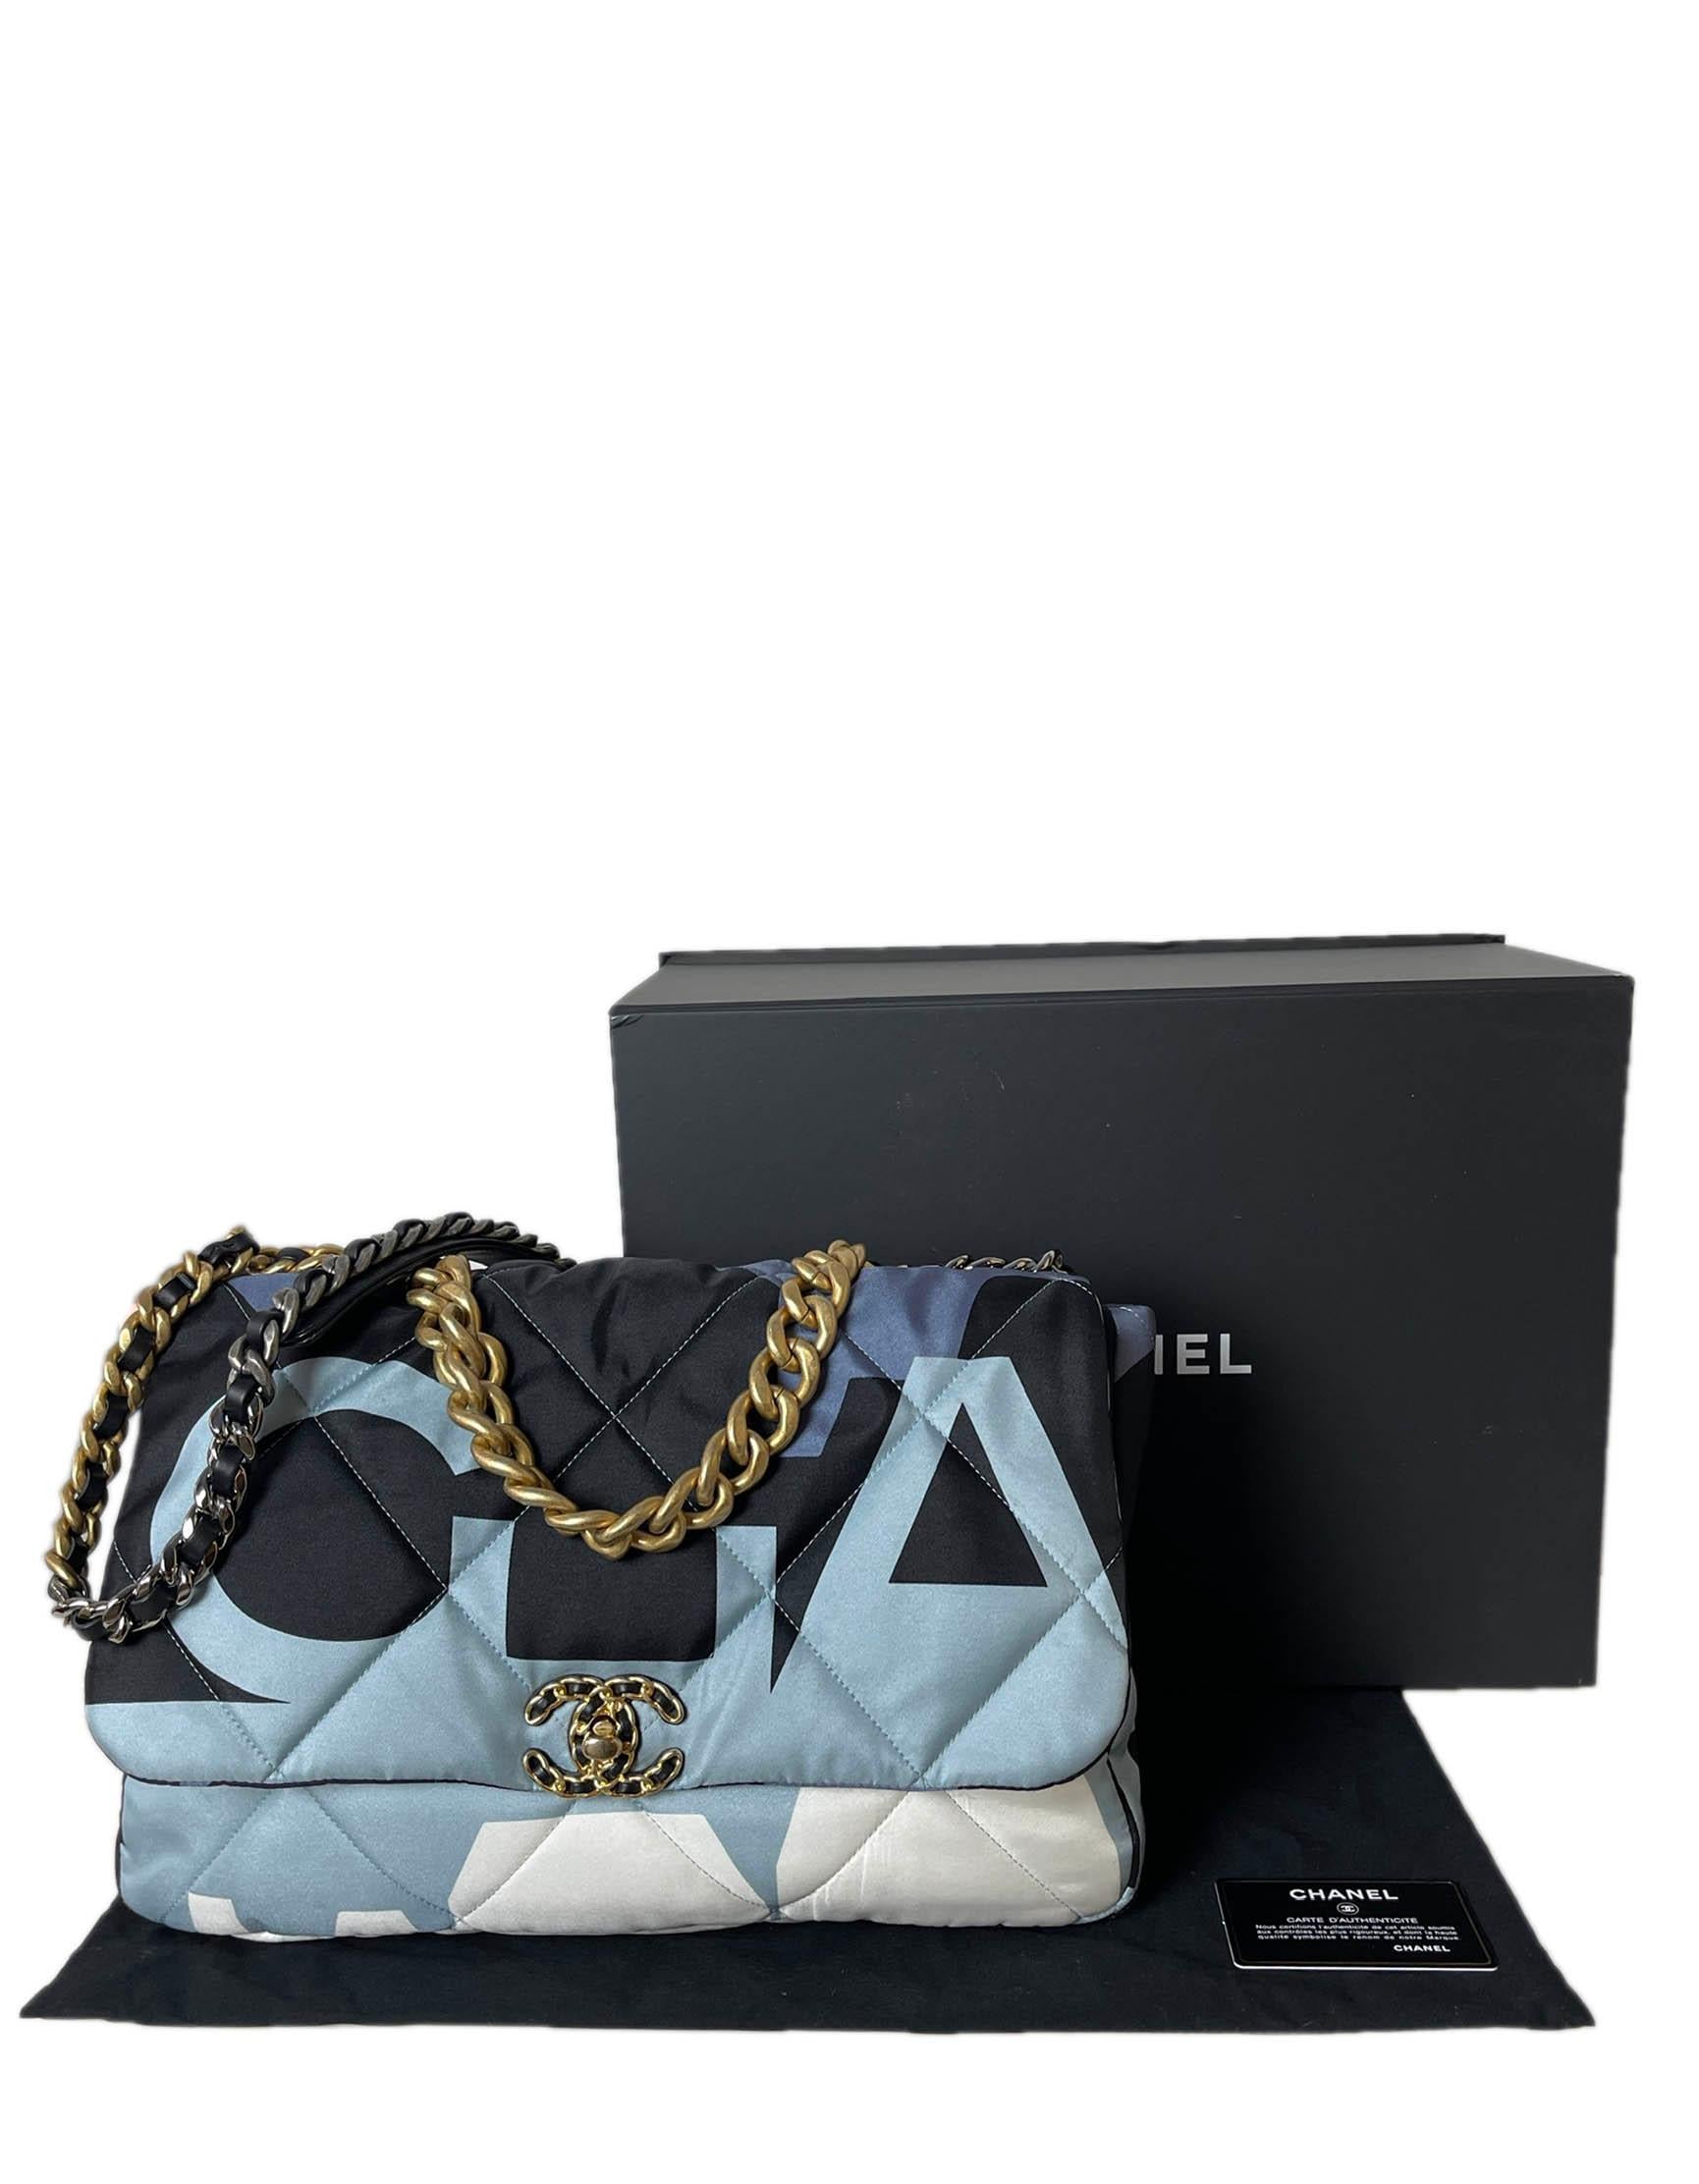 Chanel 2020 Blue/White/Black Nylon Maxi Scarf Chanel 19 Flap Bag For Sale 7